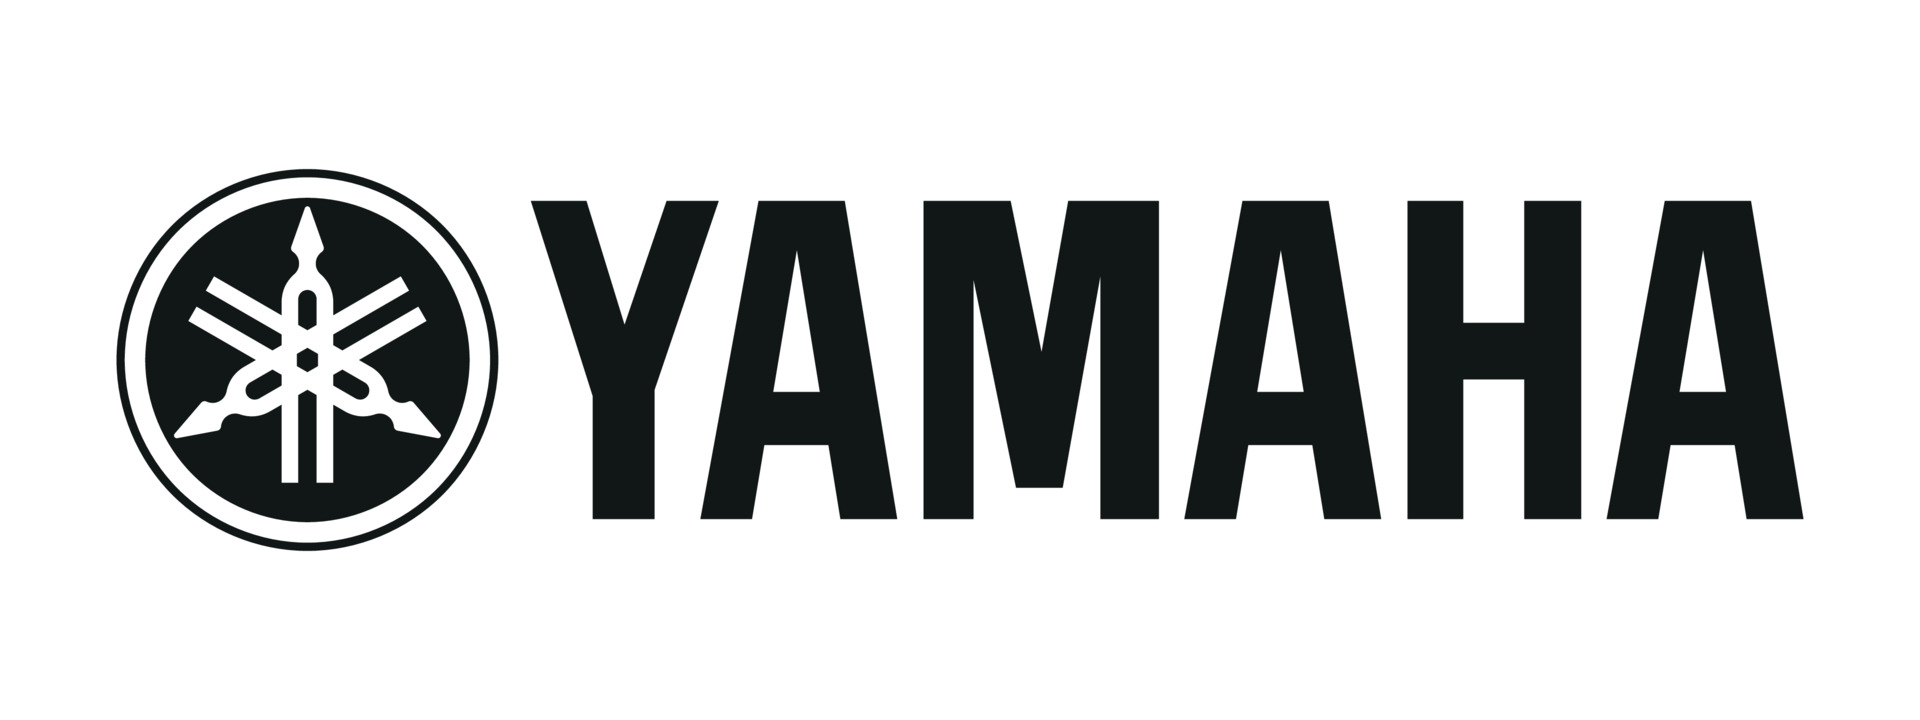 Black Yamaha logo